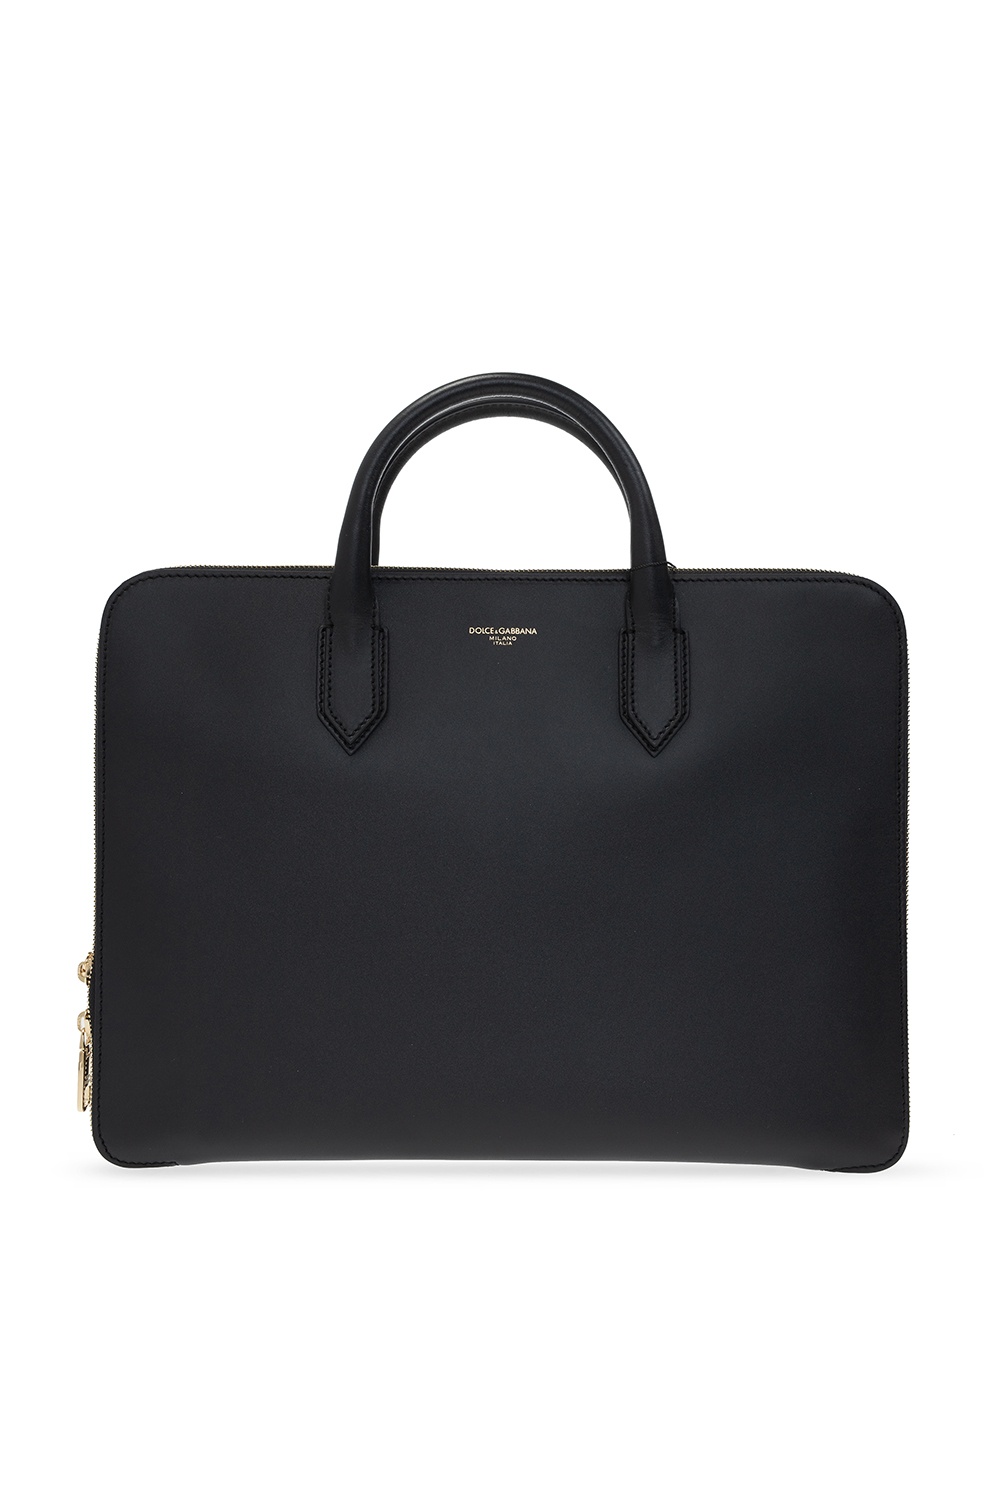 Dolce & Gabbana Leather briefcase